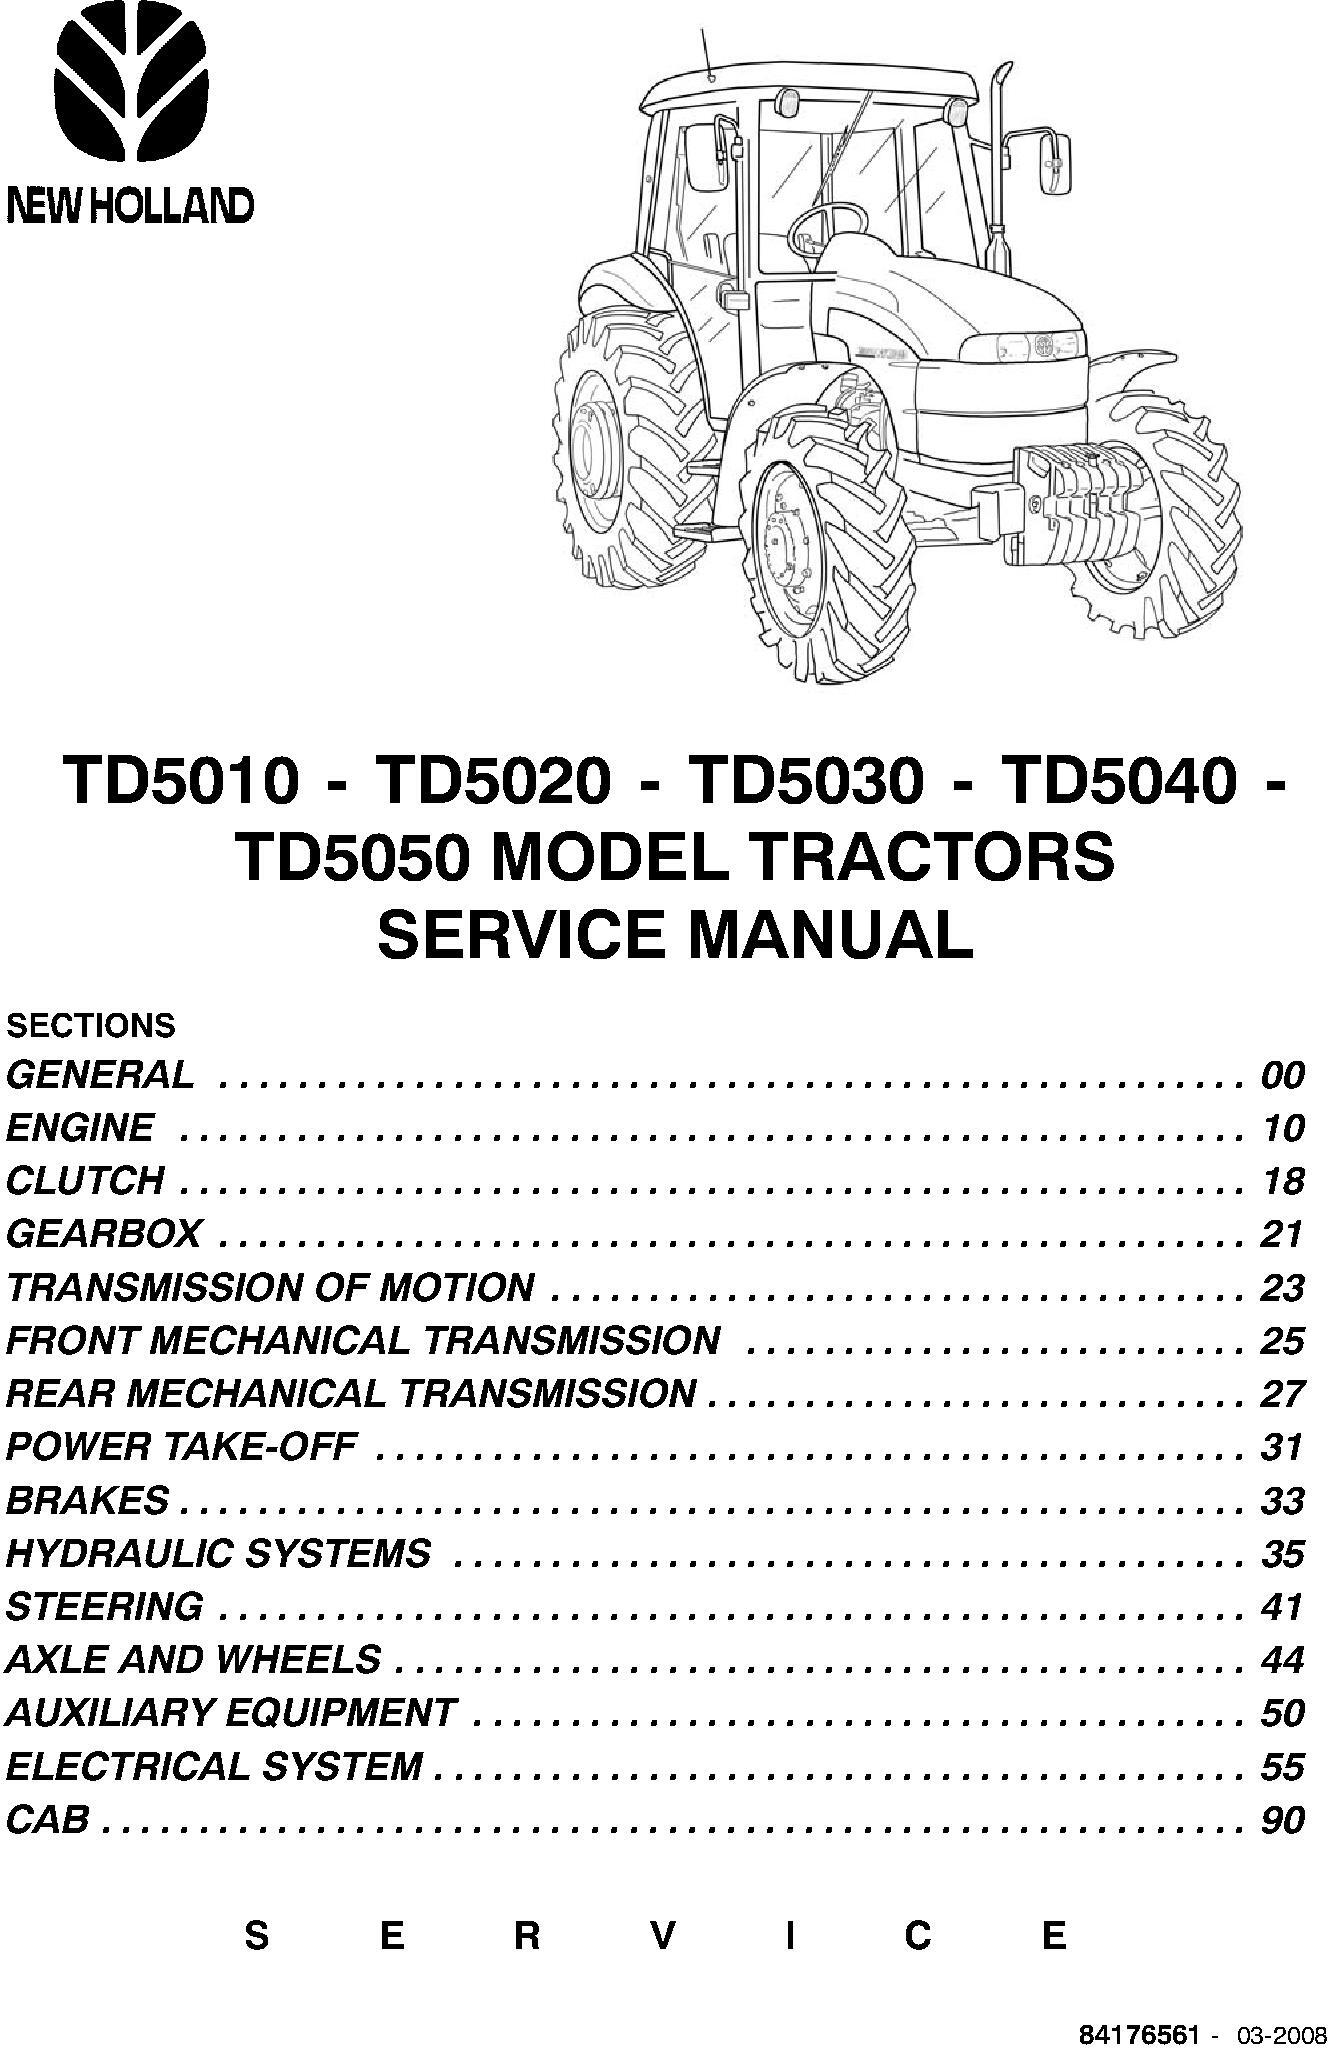 New Holland TD5010/TD5020/TD5030/TD5040/TD5050 Tractors Agricultural Service Manual - 1